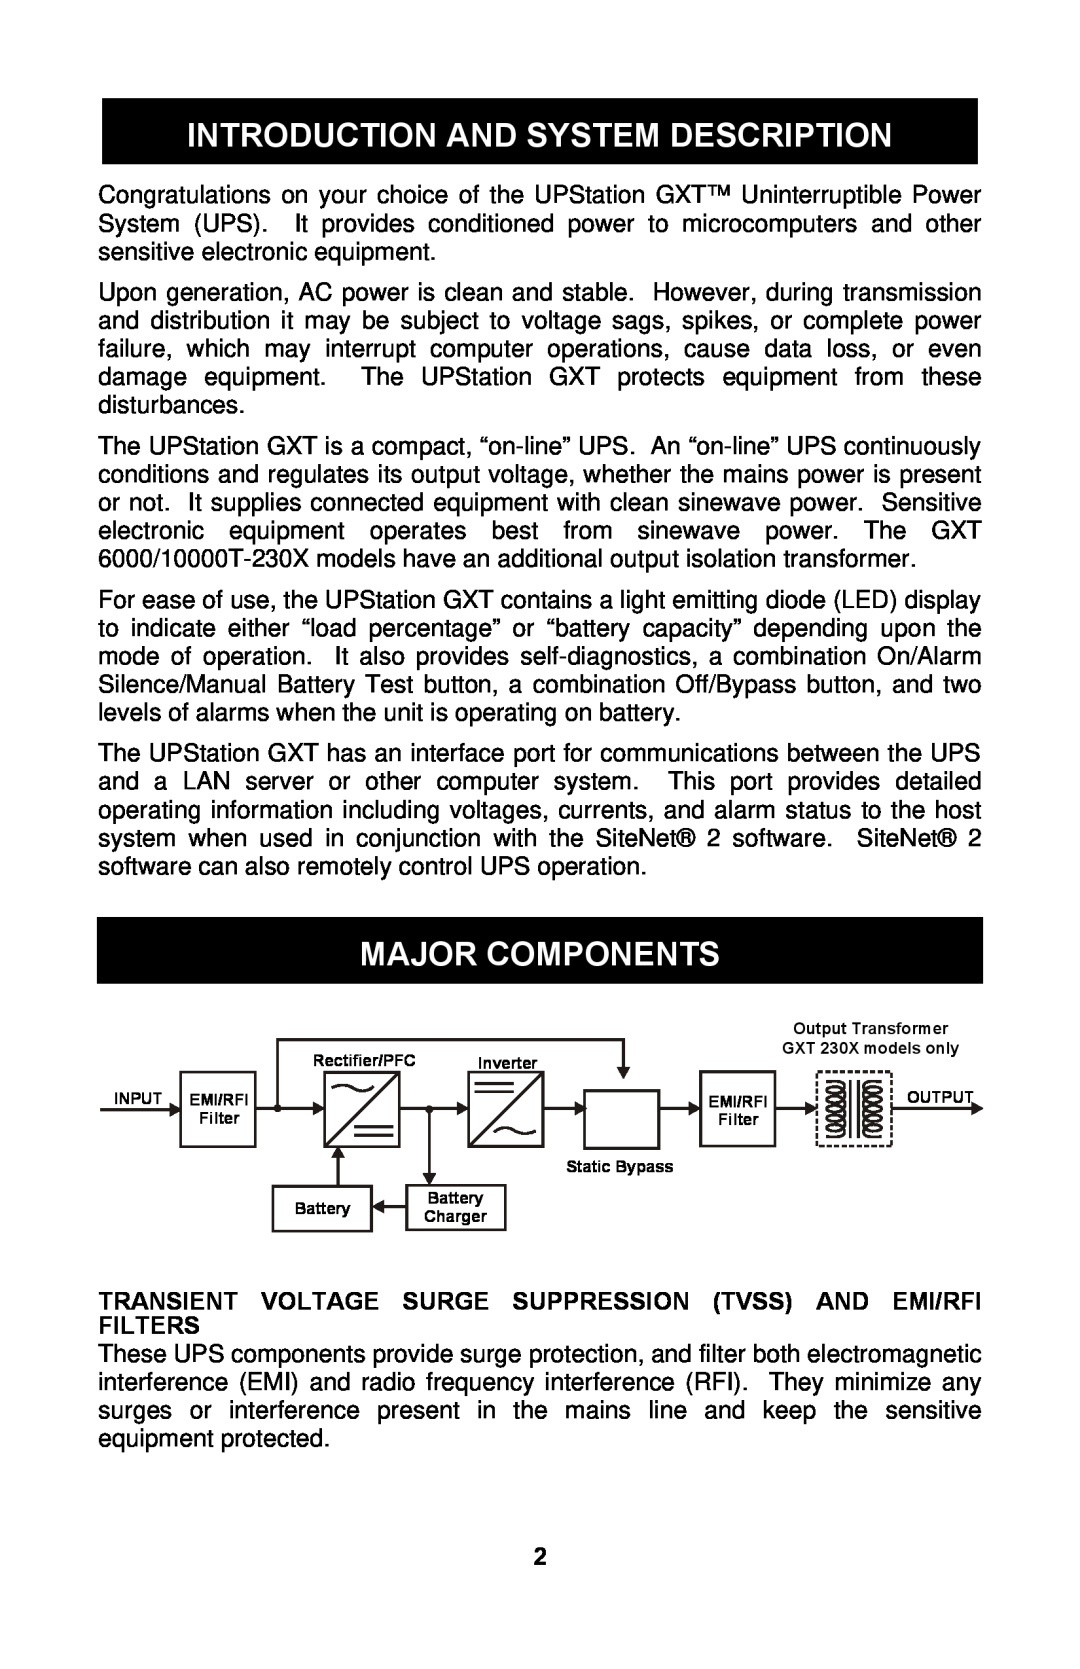 Liebert GXTTM user manual Introduction And System Description, Major Components 